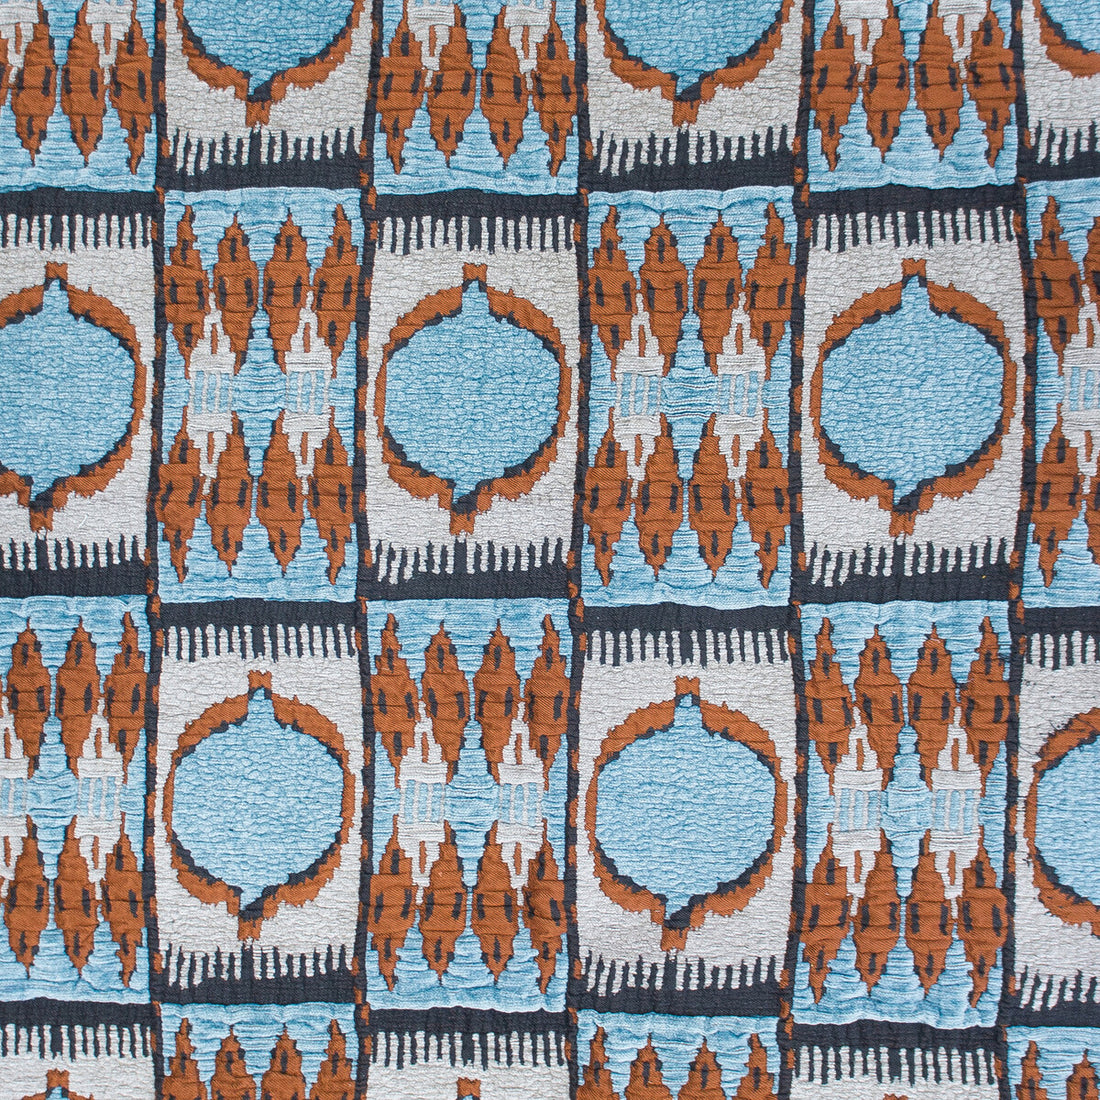 Cuzco fabric in azul/teja color - pattern GDT5571.003.0 - by Gaston y Daniela in the Gaston Nuevo Mundo collection